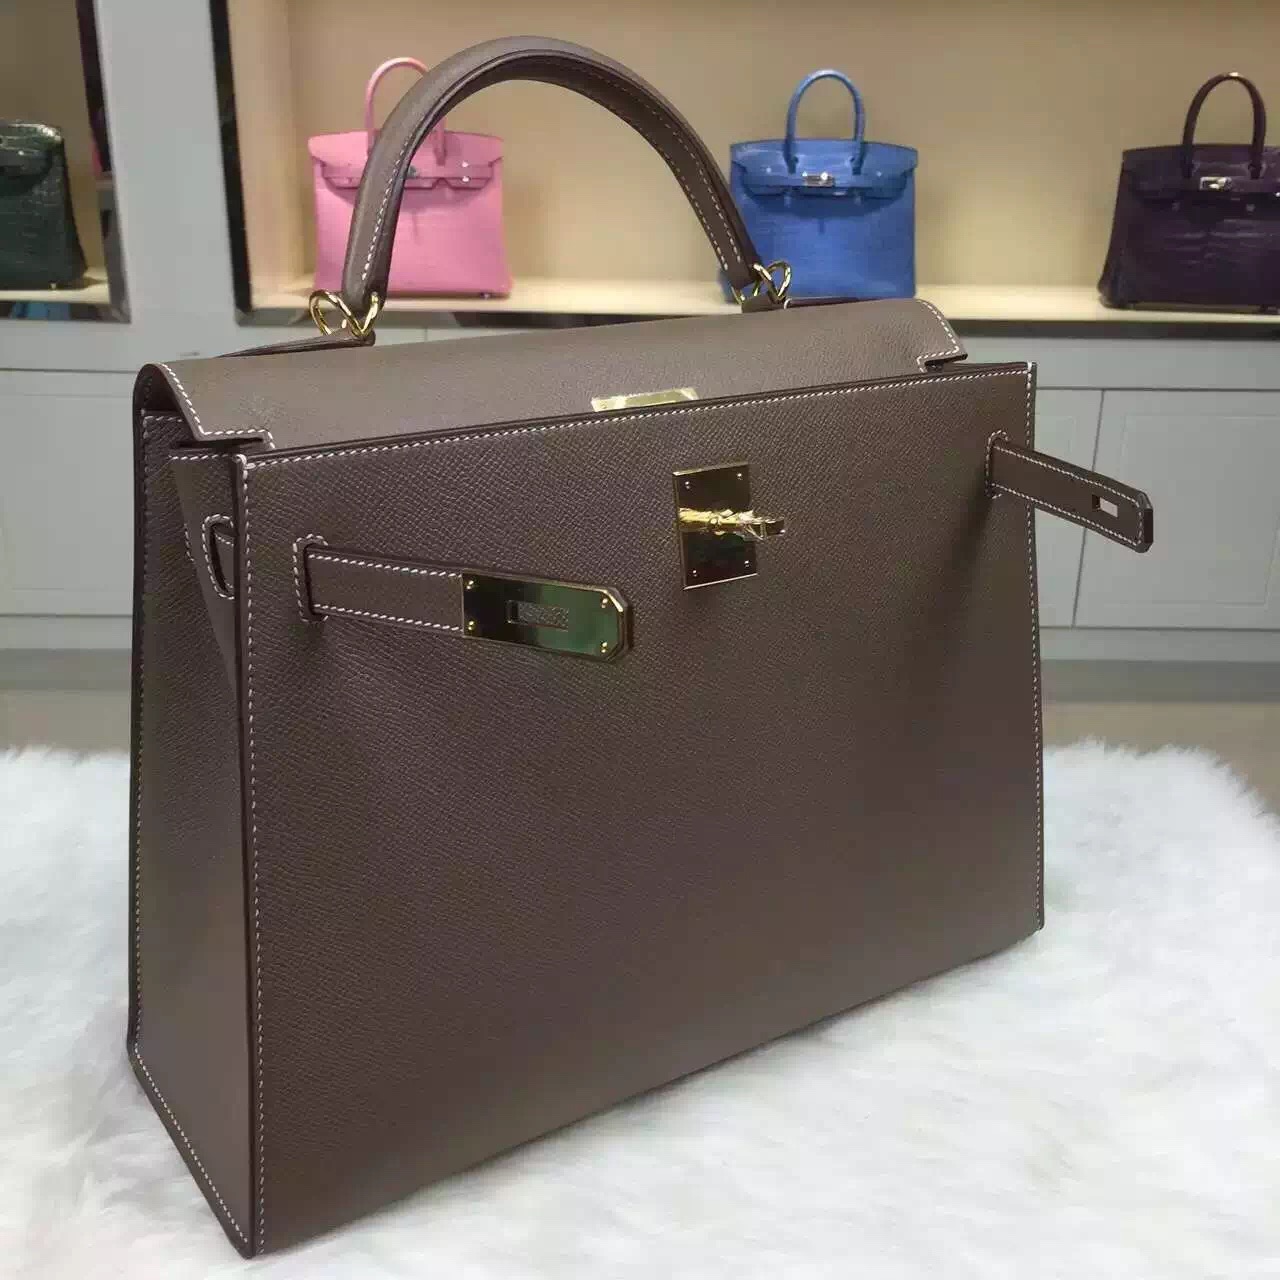 Luxury Bag Created By Hermes | semashow.com